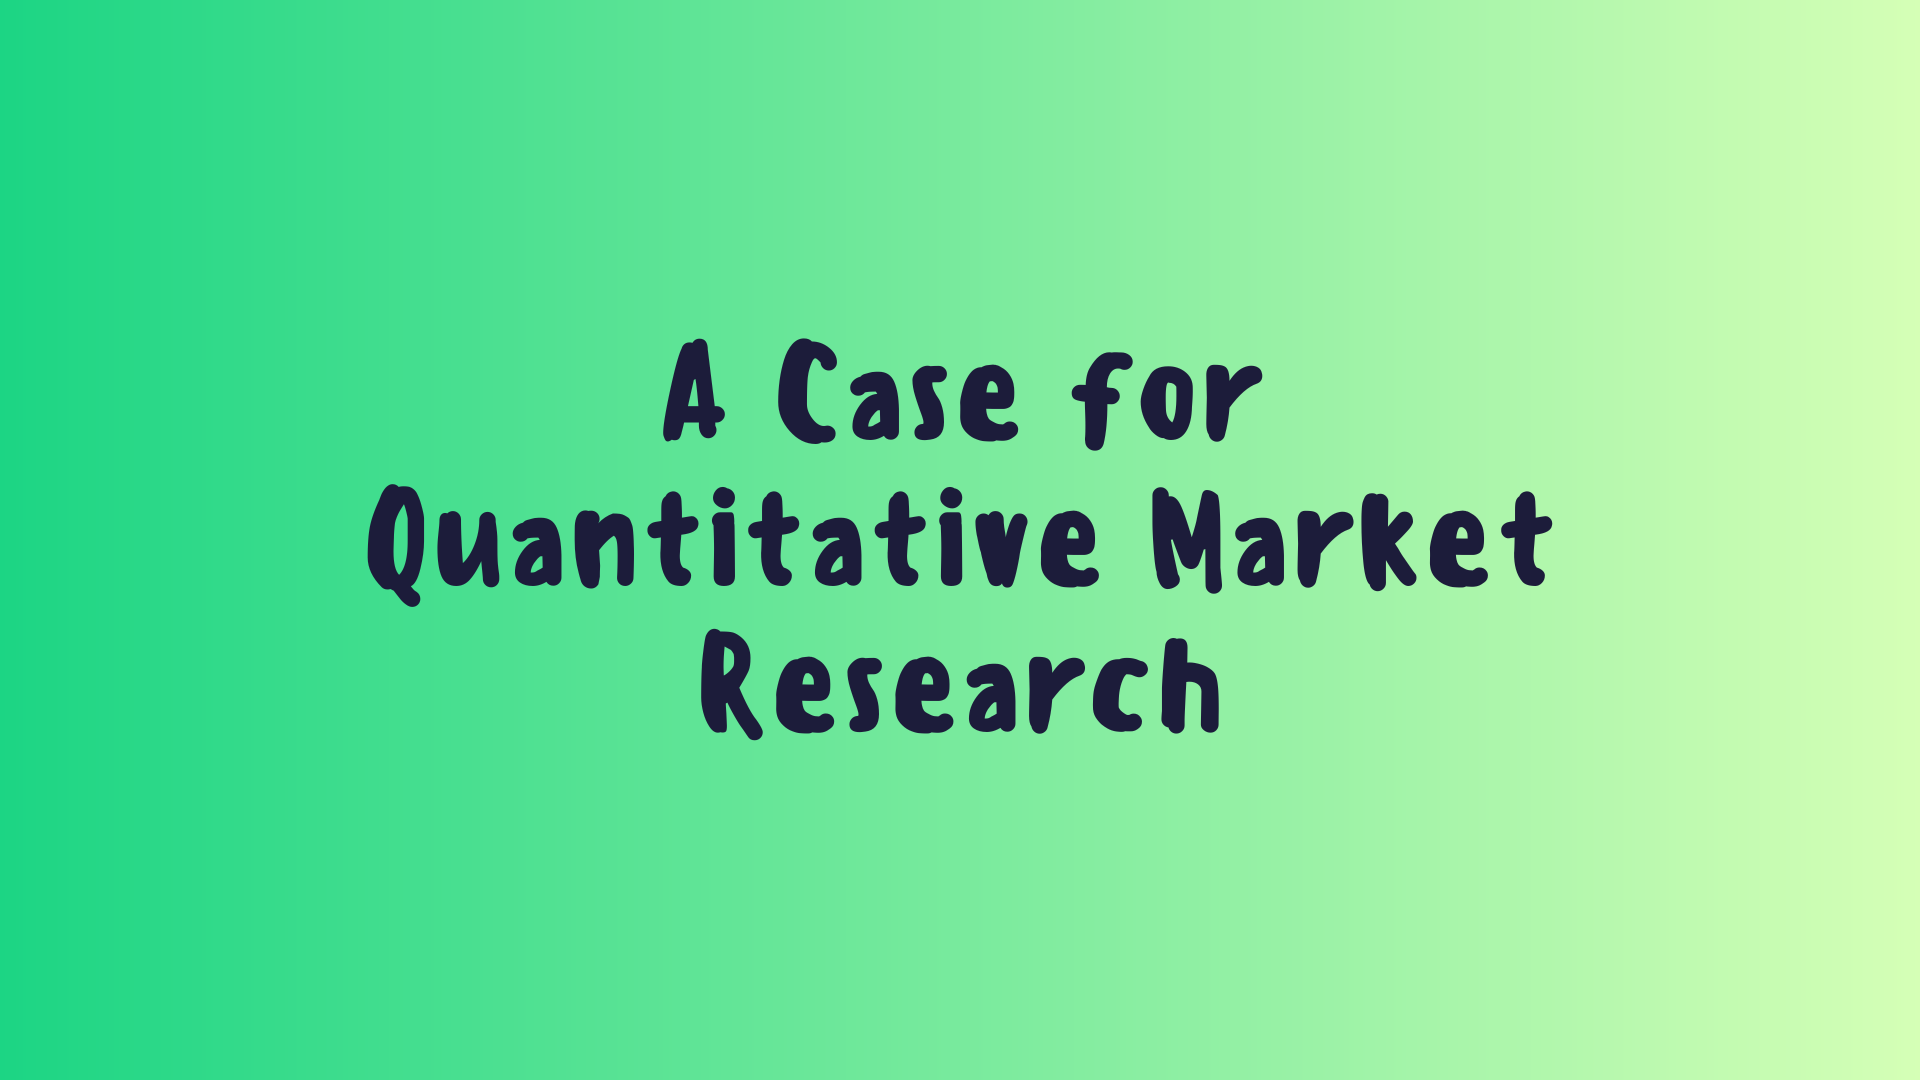 A Case for Quantitative Market Research